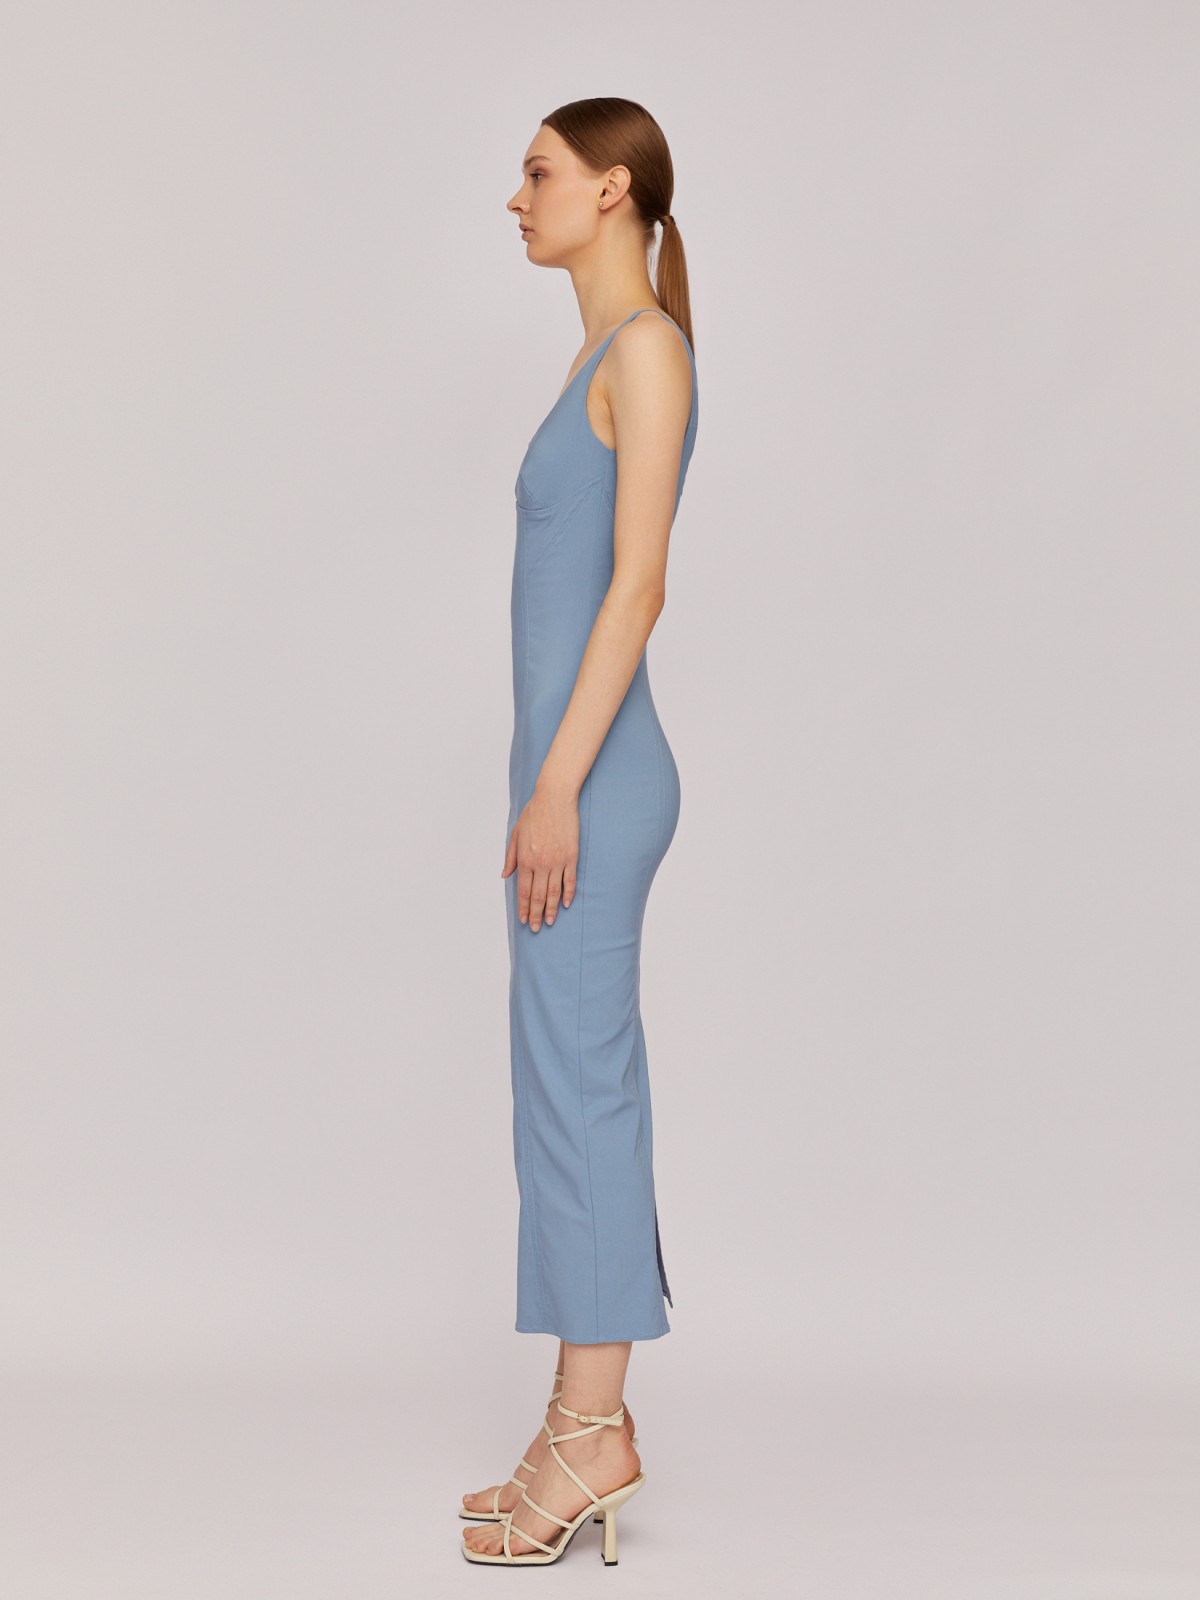 Платье-футляр без рукавов с имитацией корсета zolla 02425824Y091, цвет голубой, размер XS - фото 3